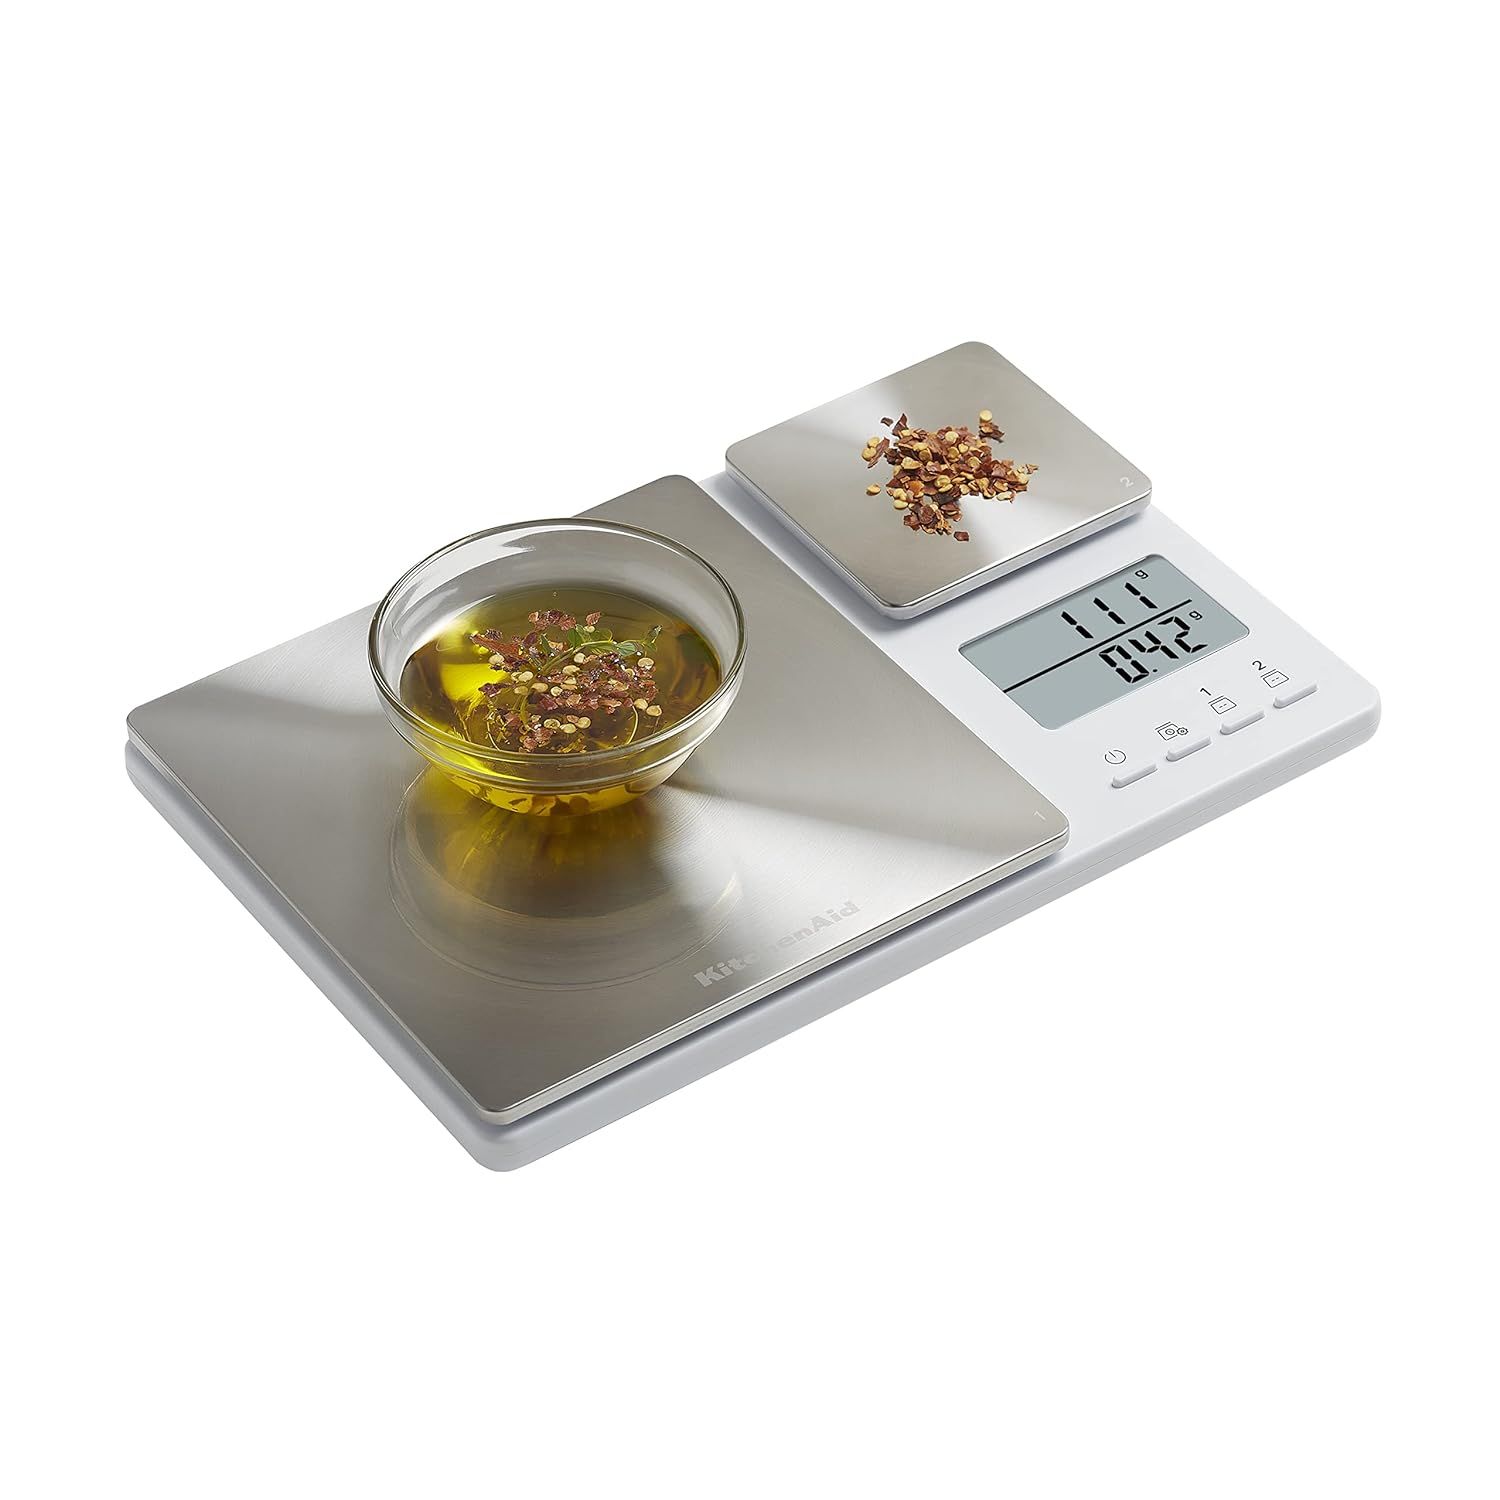 KitchenAid Dual Platform Digital Kitchen Scale, 11 Pound Capacity, Black